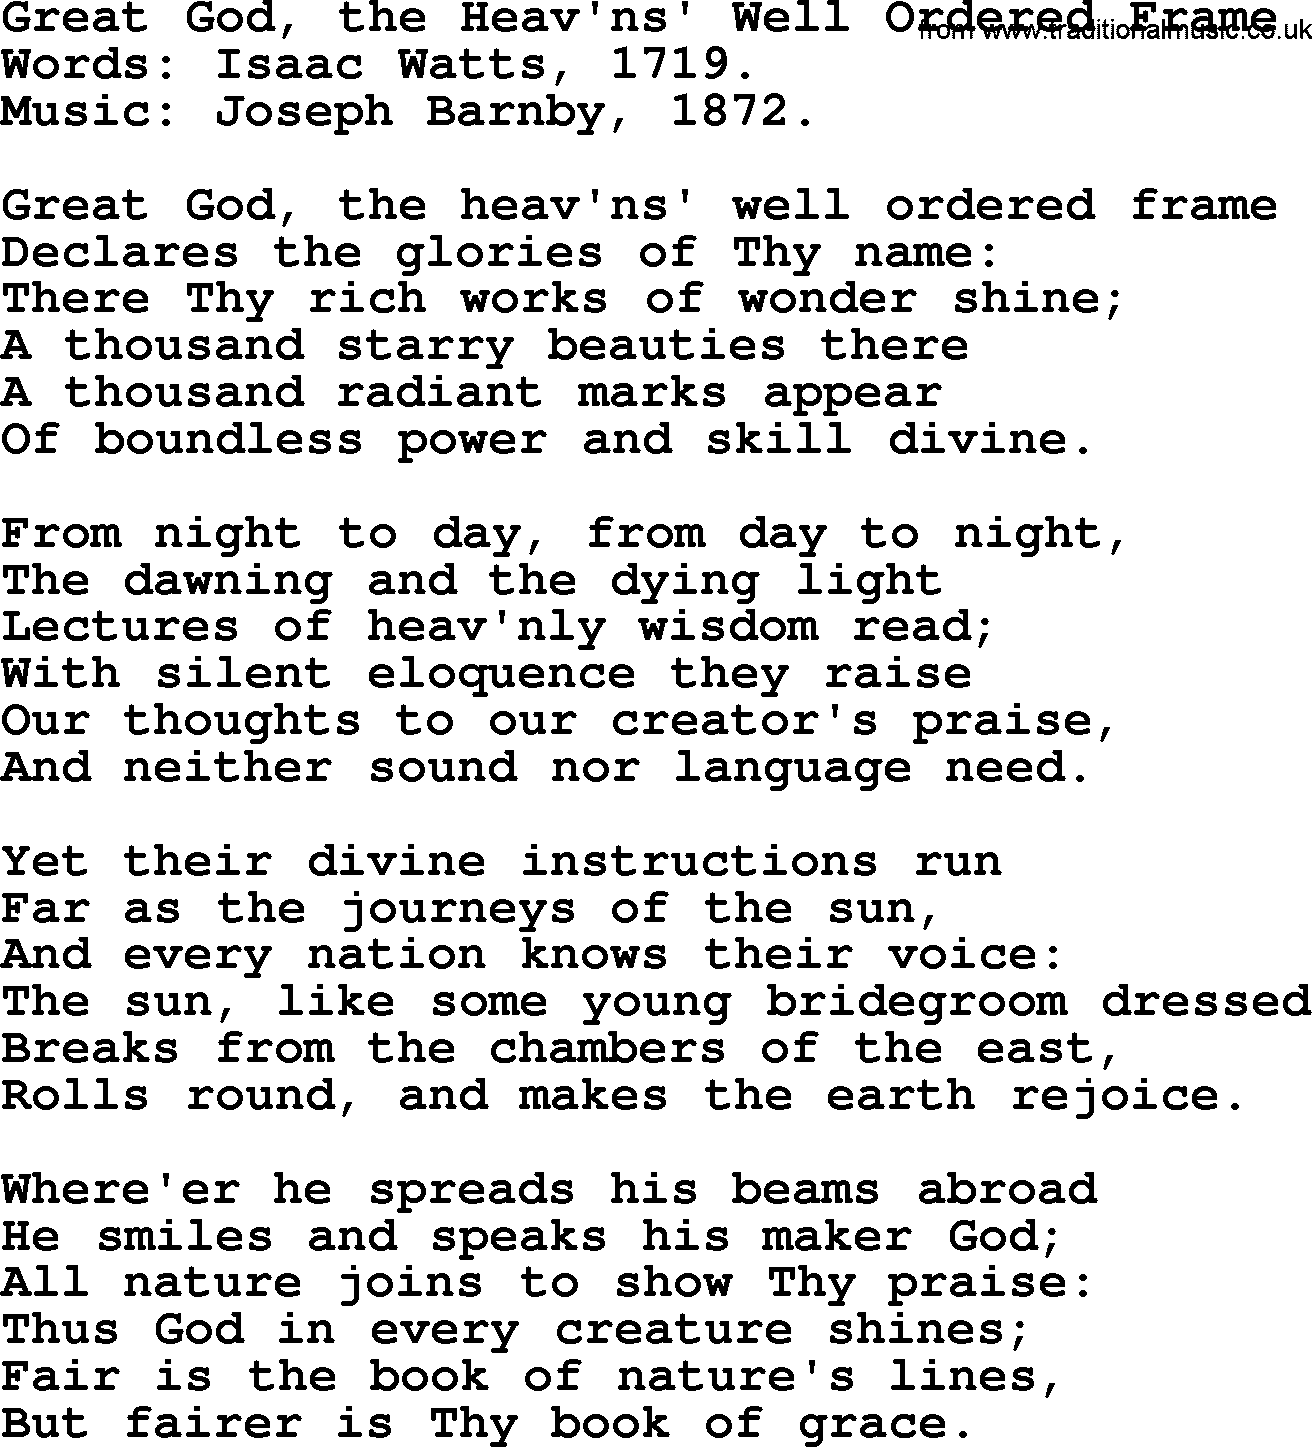 Isaac Watts Christian hymn: Great God, the Heav'ns' Well Ordered Frame- lyricss